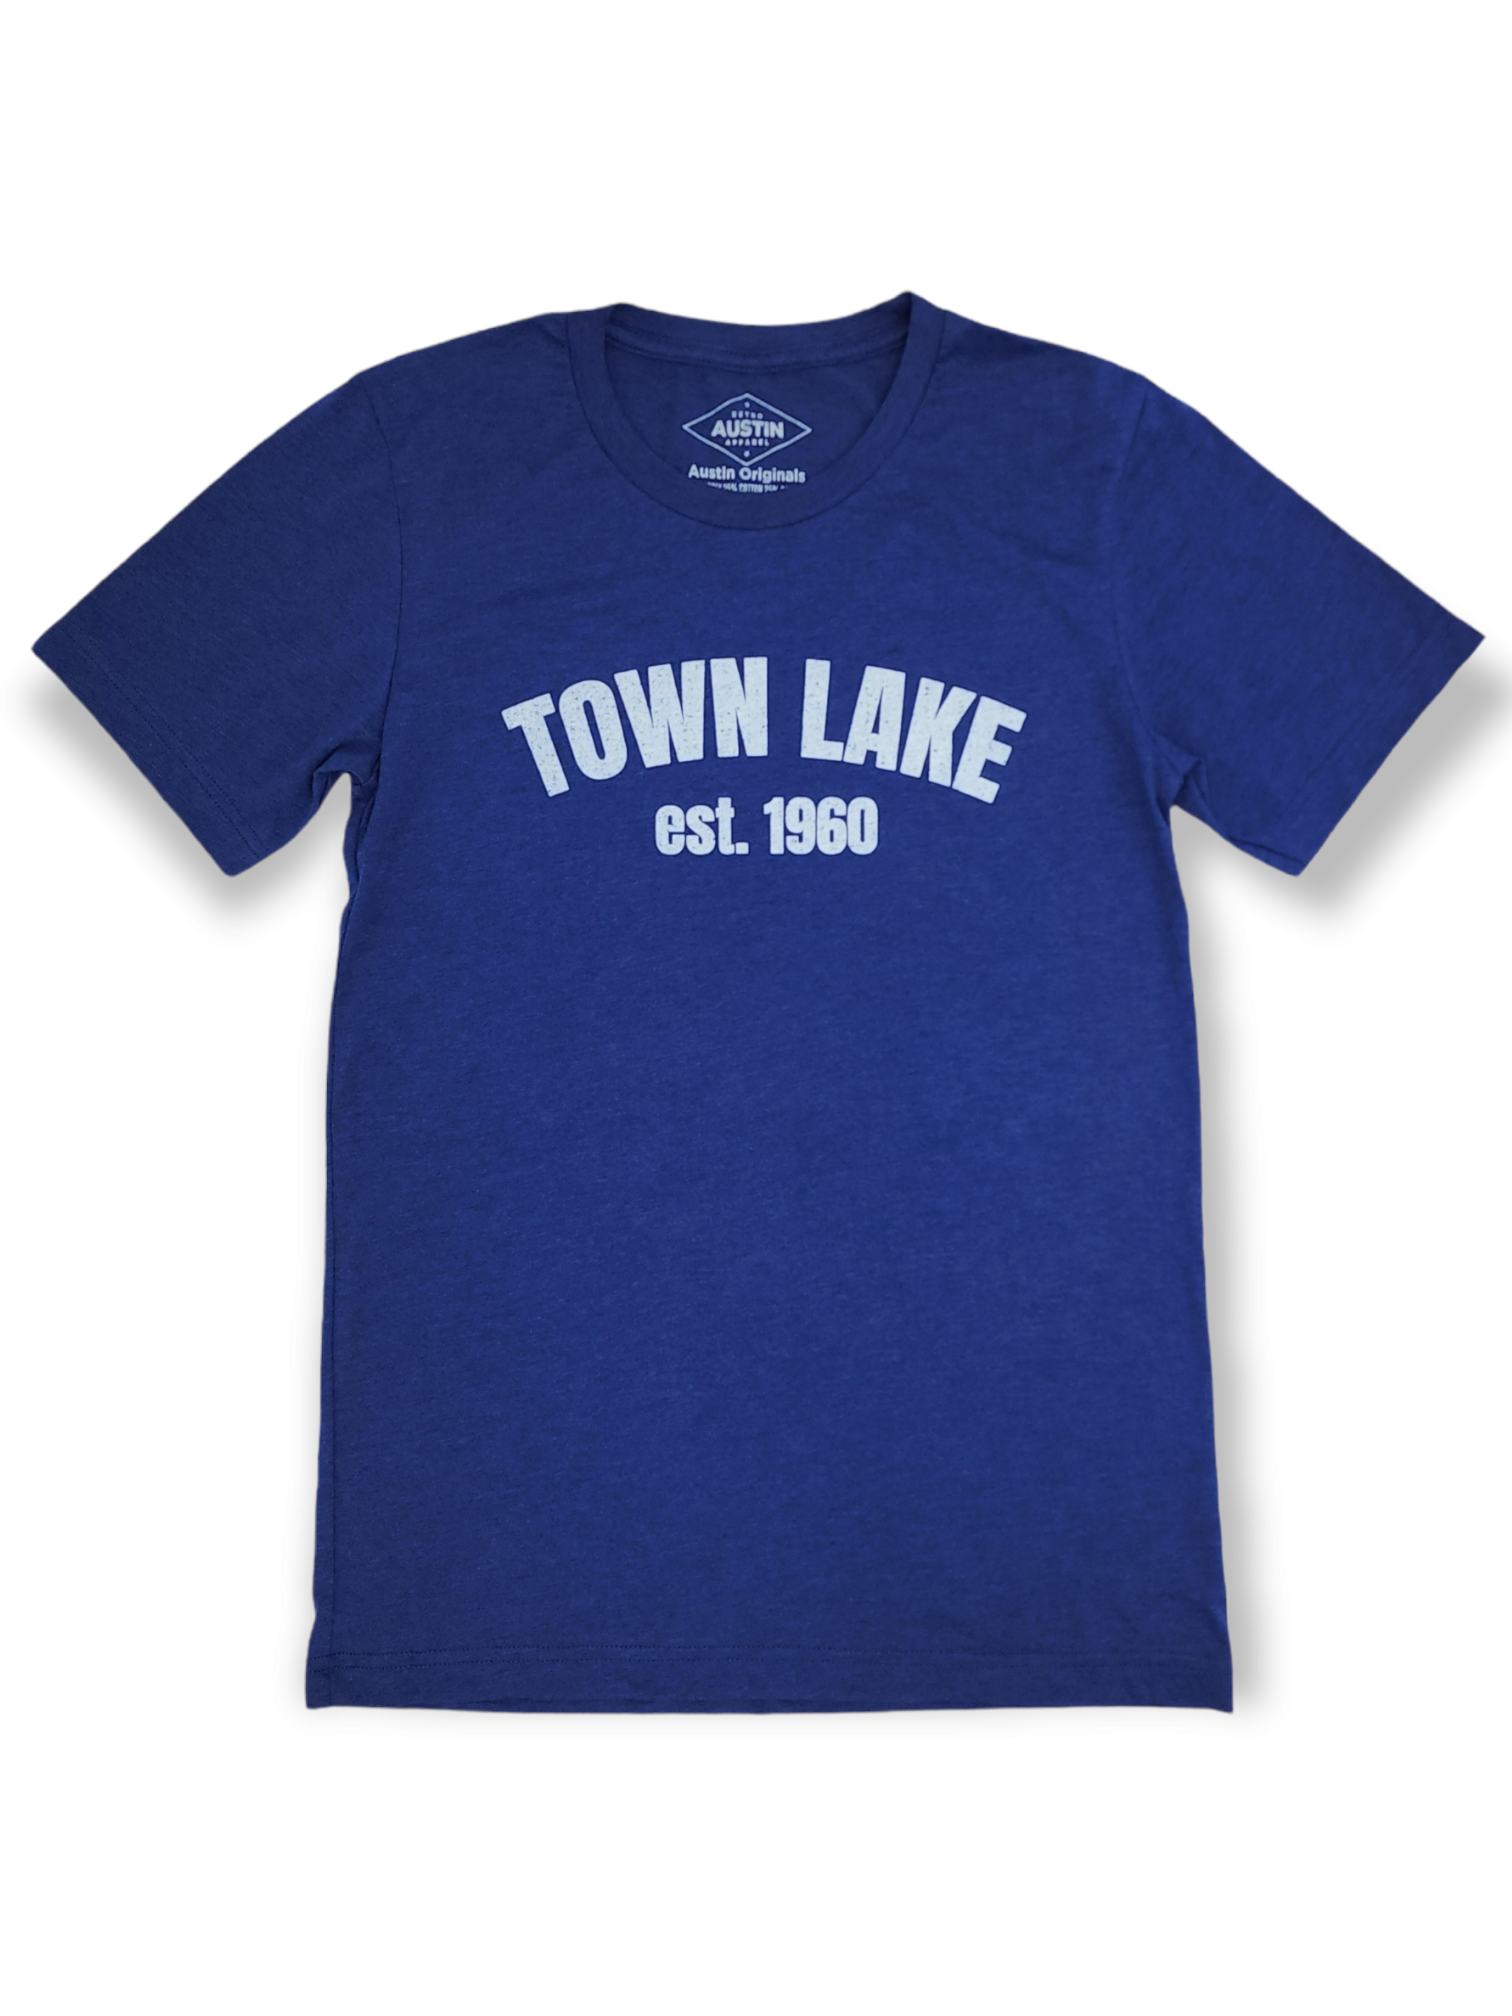 Town Lake Retro Tee